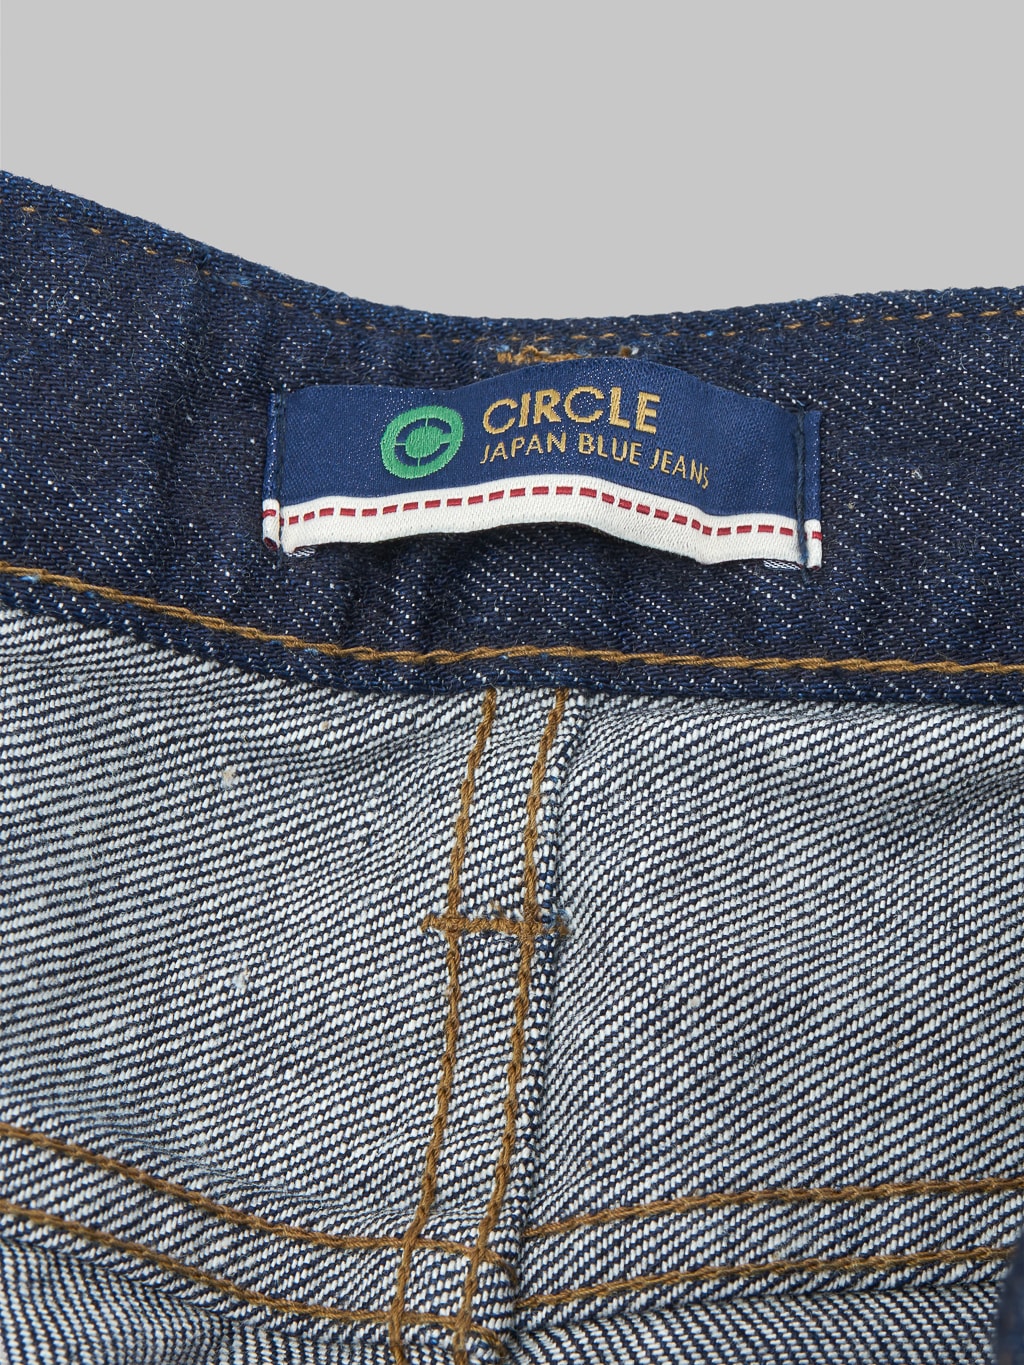 Japan Blue J205 Stretch Circle Tapered denim Jeans stitching